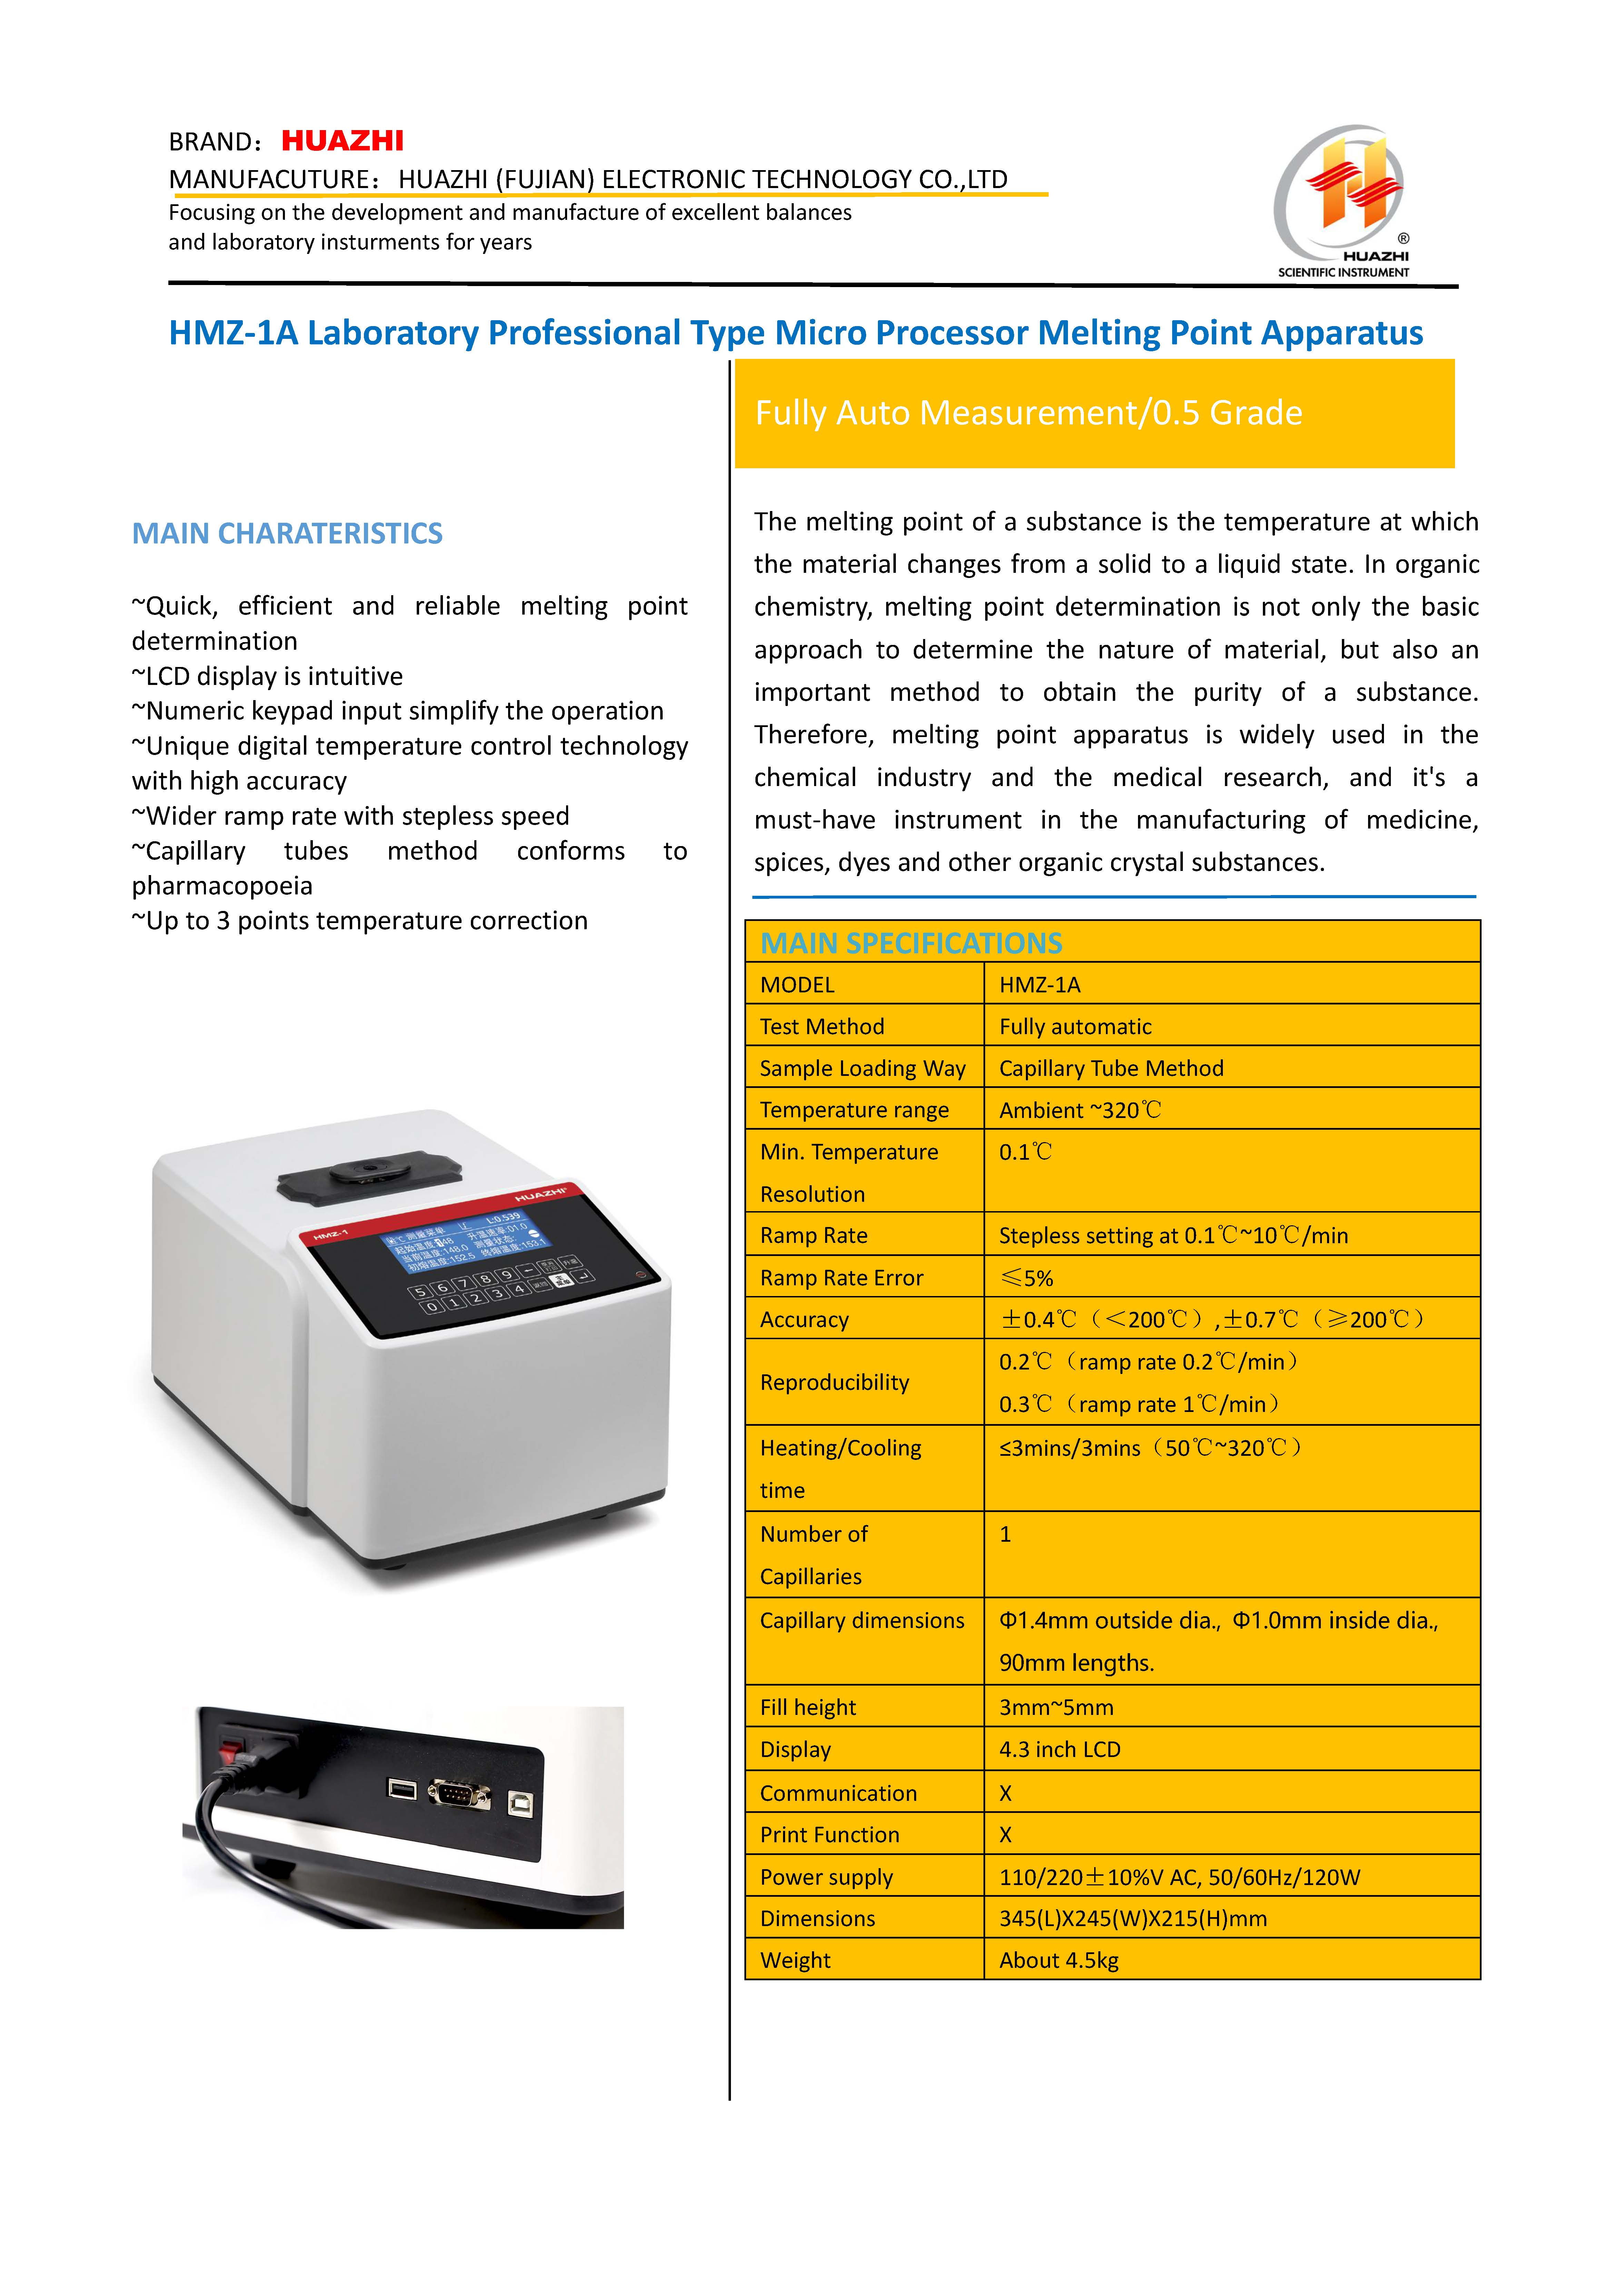 HMZ-1A Laboratory Professional Melting Point Apparatus.jpg